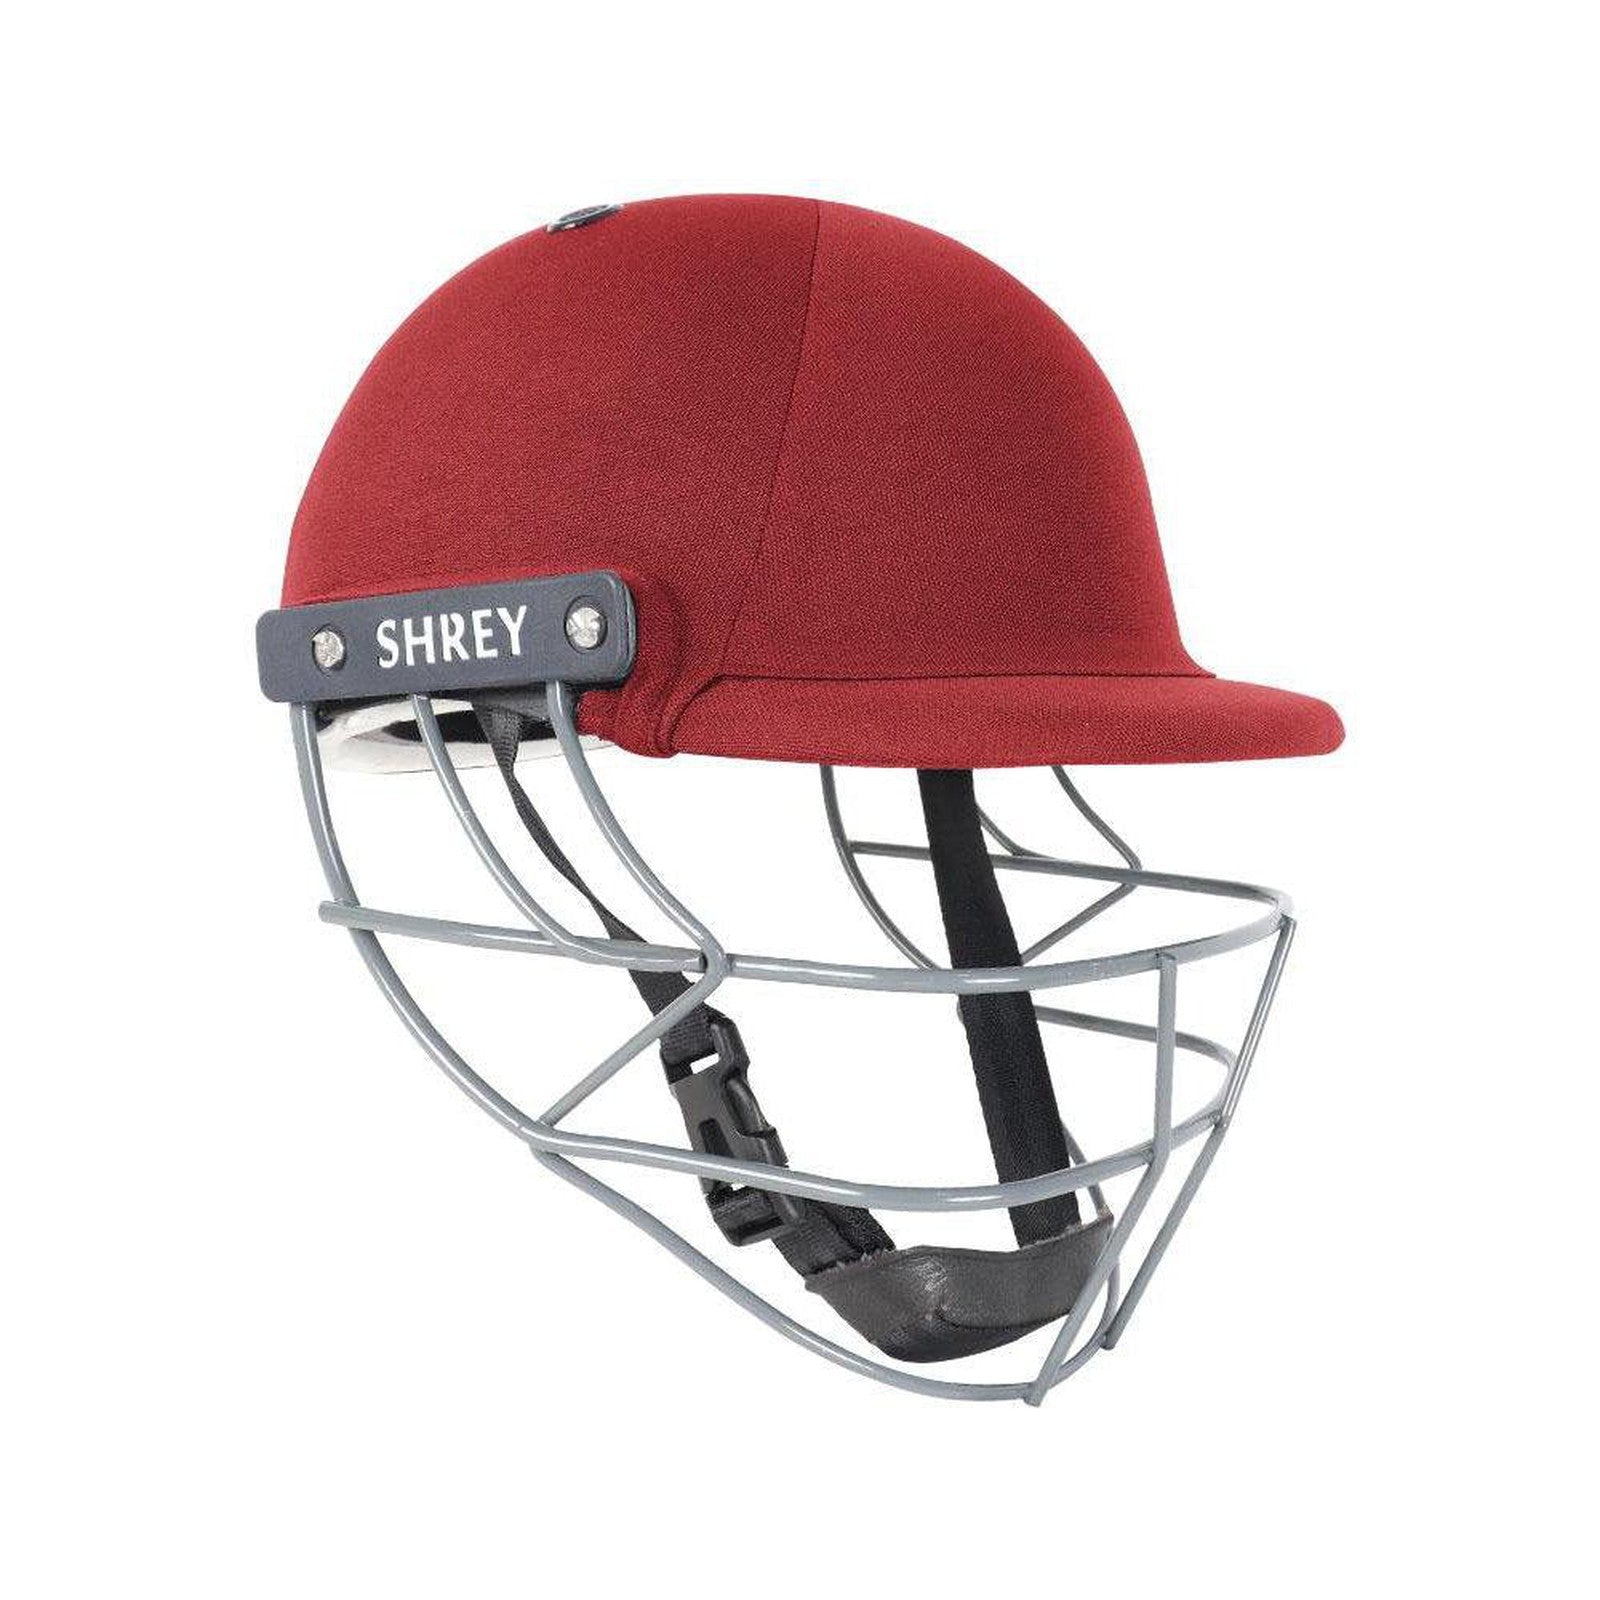 Shrey Performance 2.0 Cricket Helmet With Mild Steel - Maroon Senior